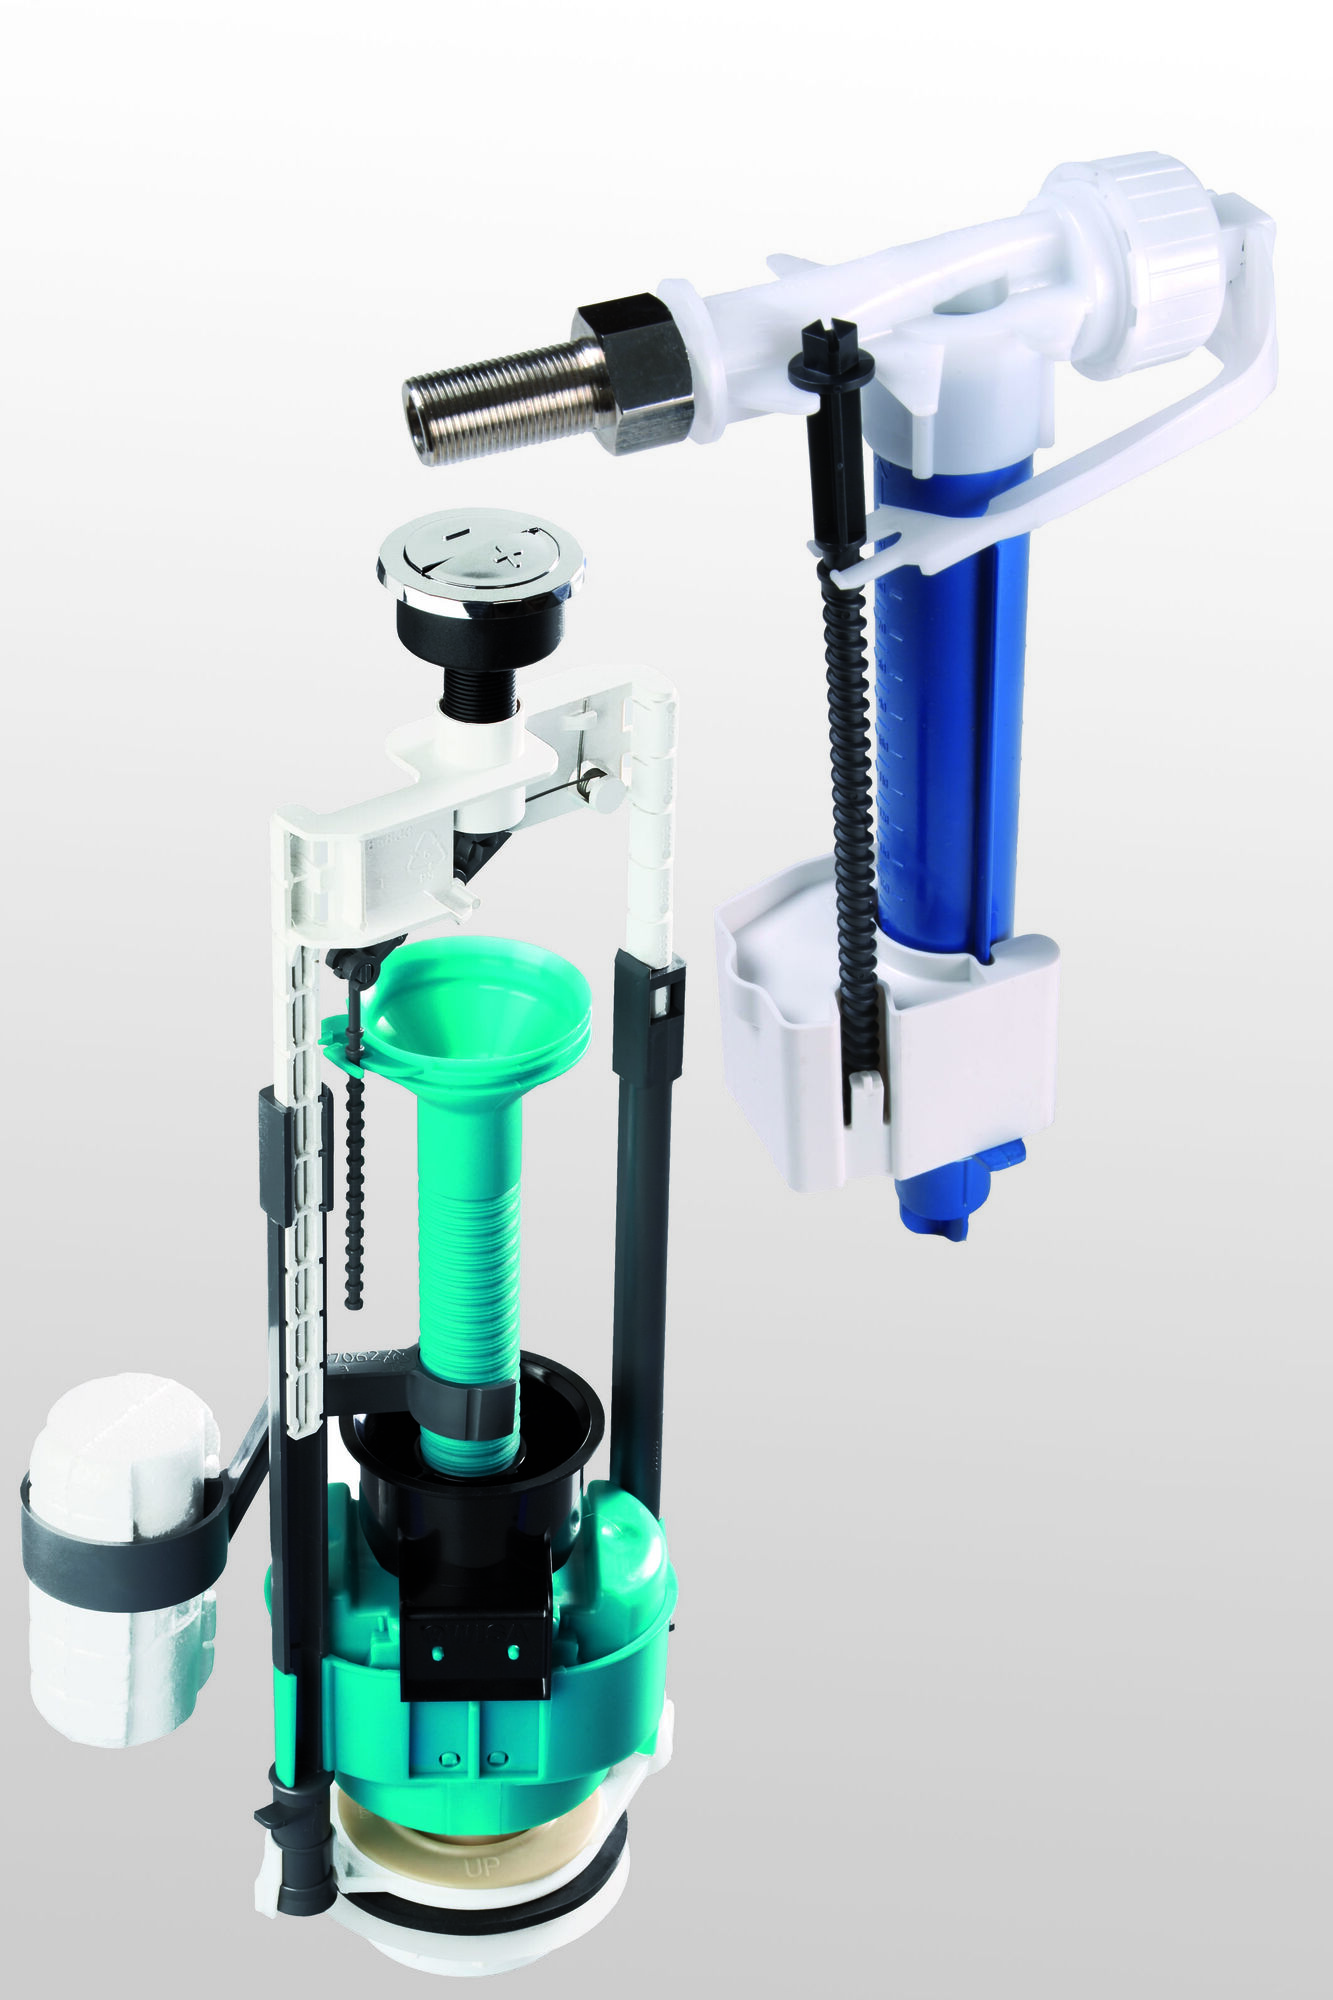 Universal flush valve and hydrolic float valve